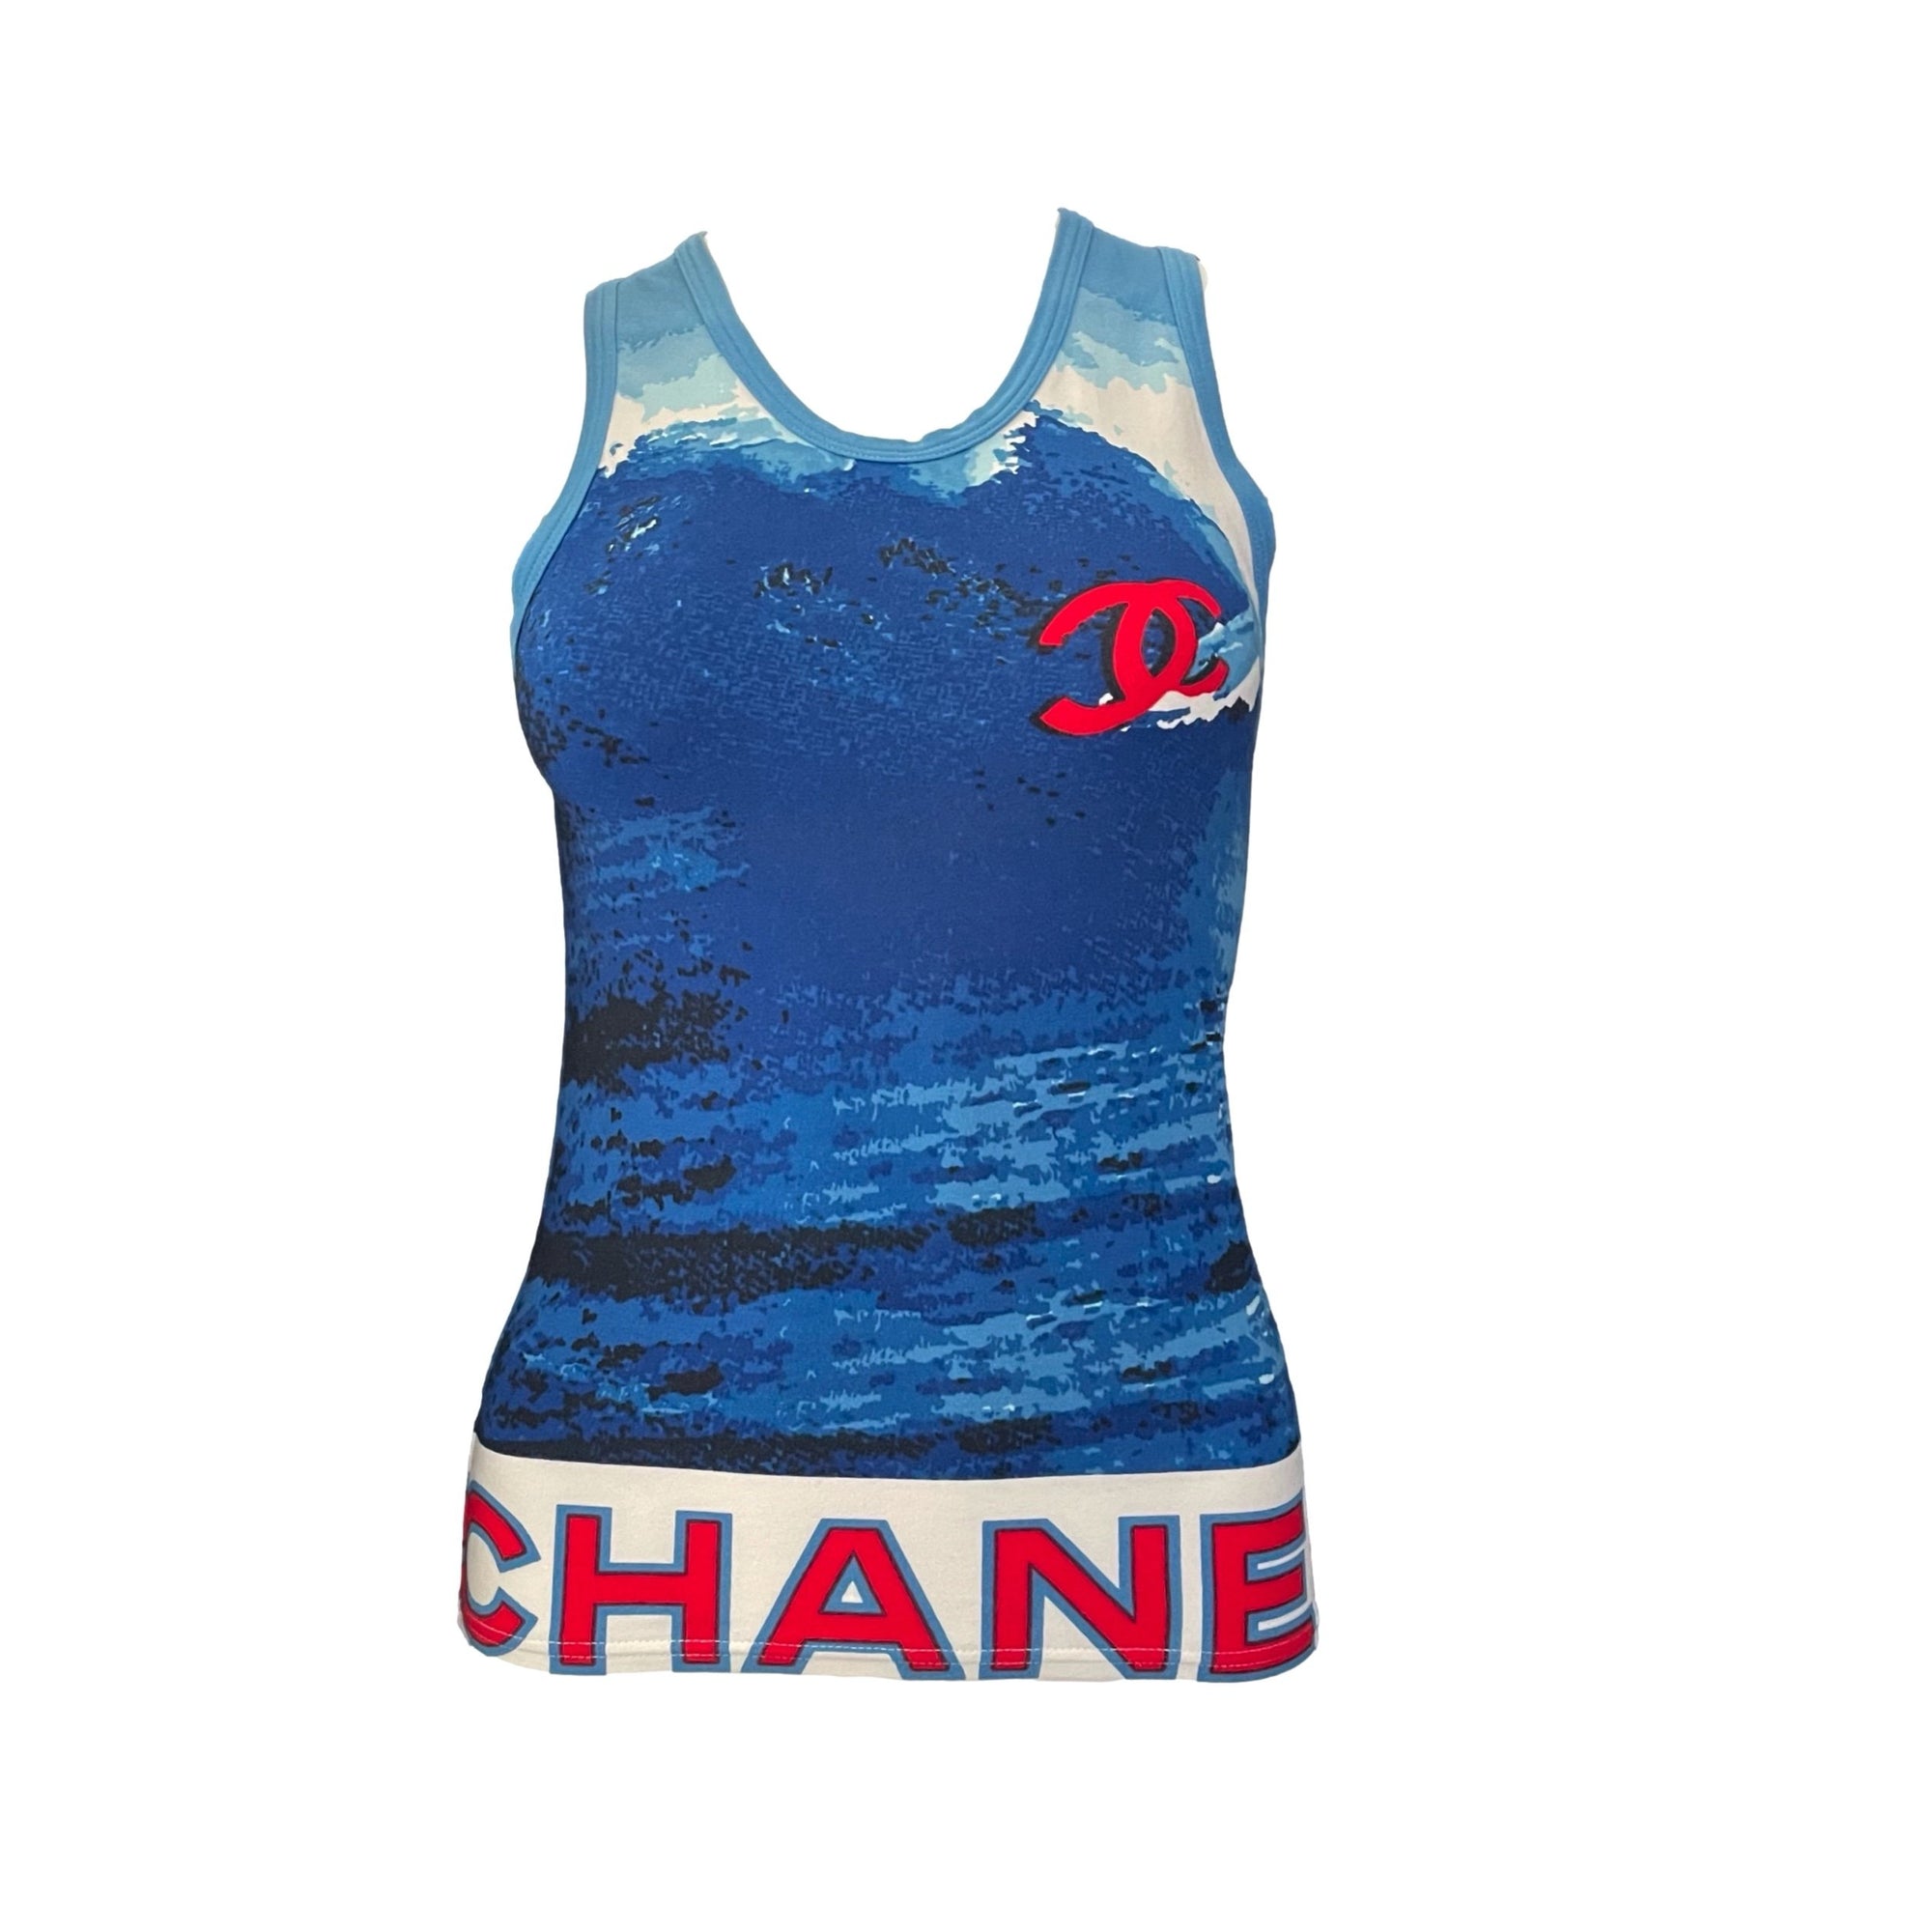 Chanel Blue Surf Top - 38 - Apparel